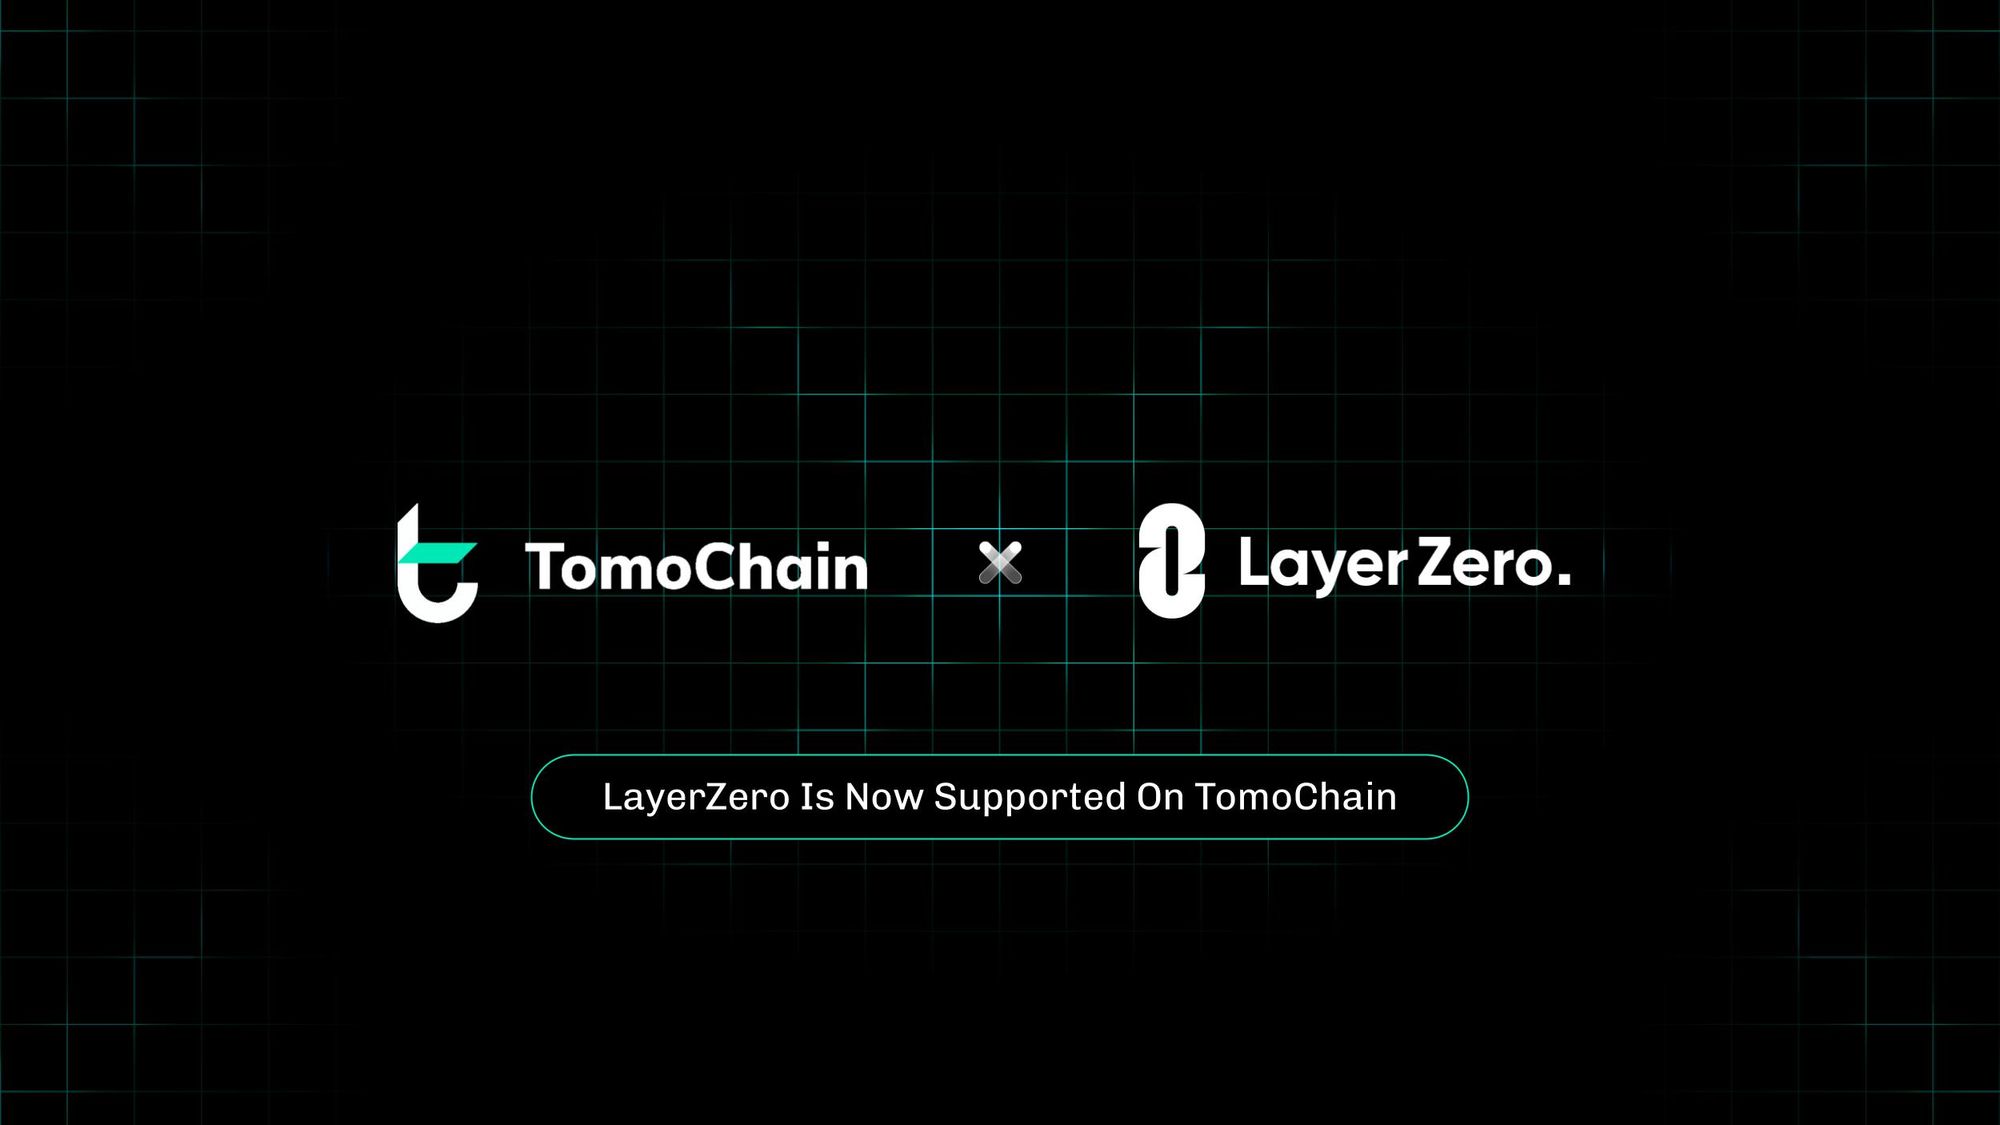 TomoChain Integrates LayerZero to Elevate Cross-Chain Capabilities